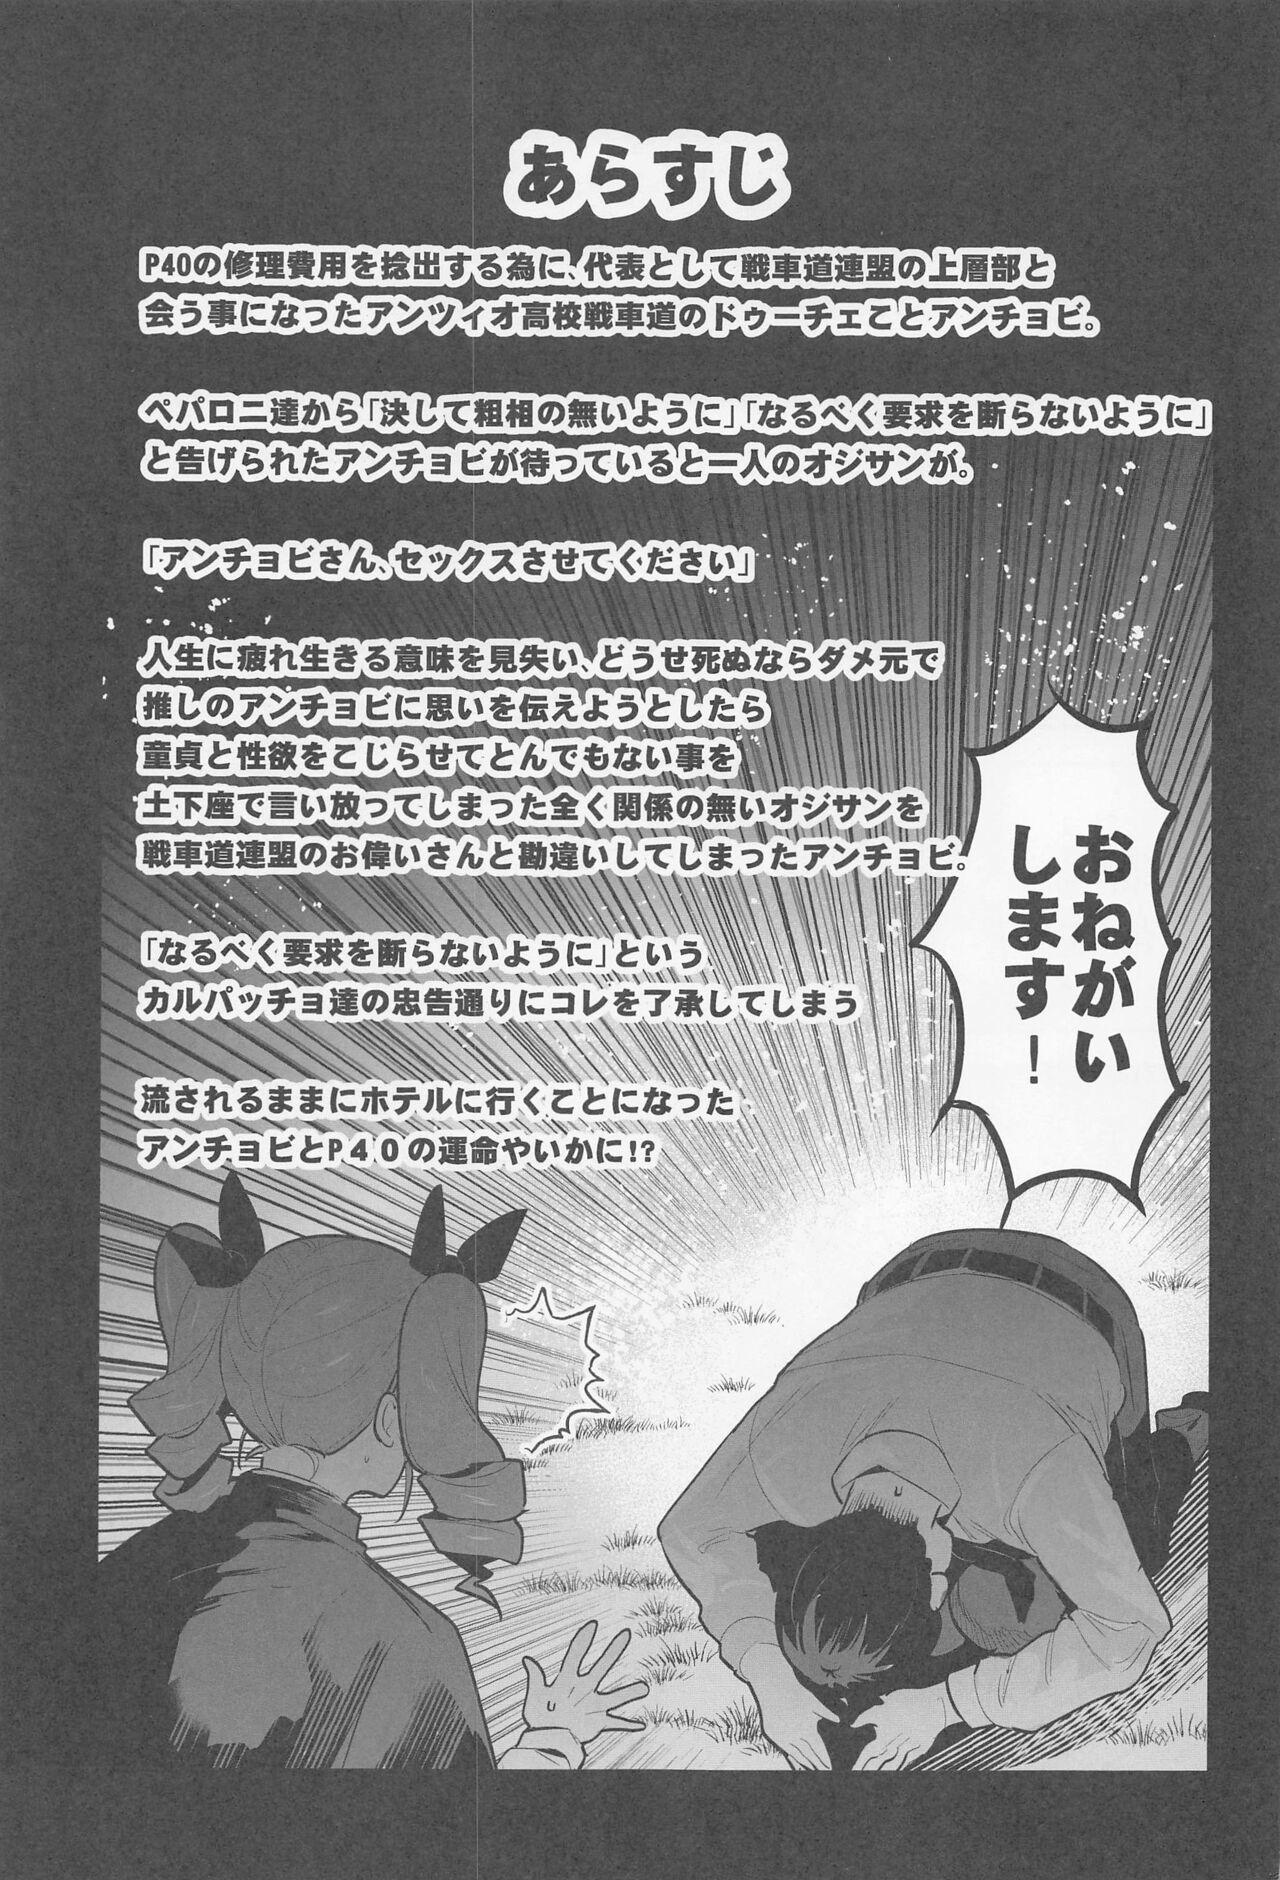 Letsdoeit anchobi dogezadeonegaishitaraippatsuyarasetekuremashita - Girls und panzer Nerd - Page 2